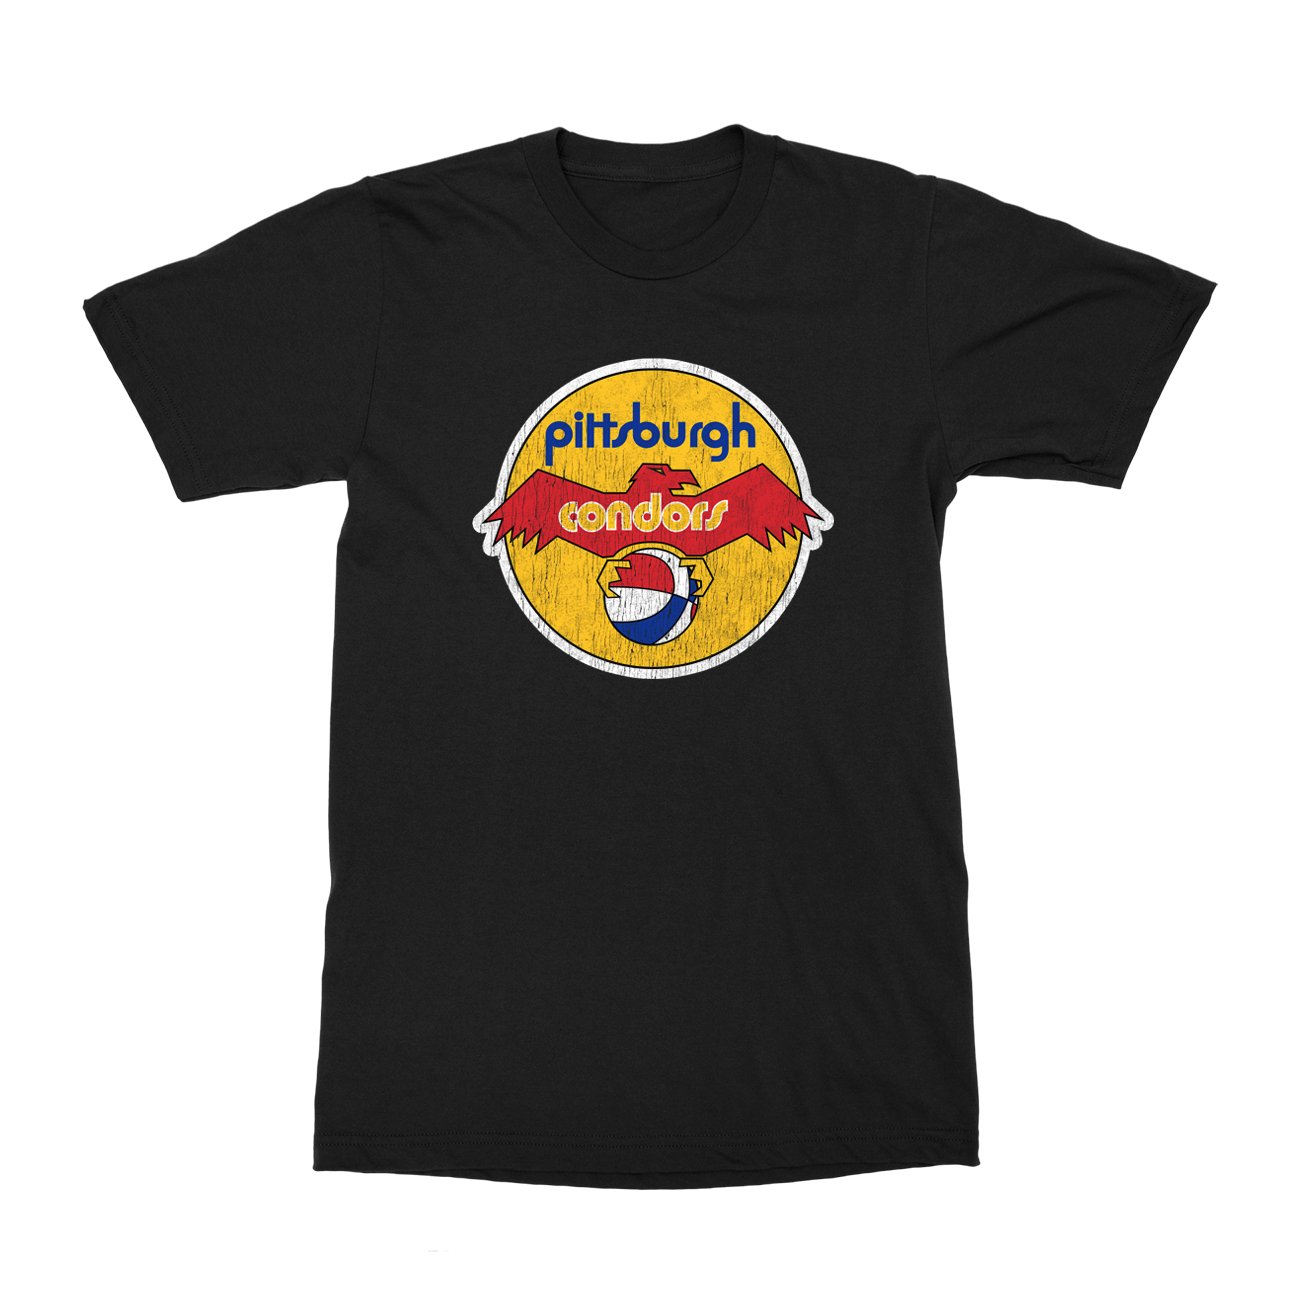 Pittsburg Condors T-Shirt - Black Cat MFG -